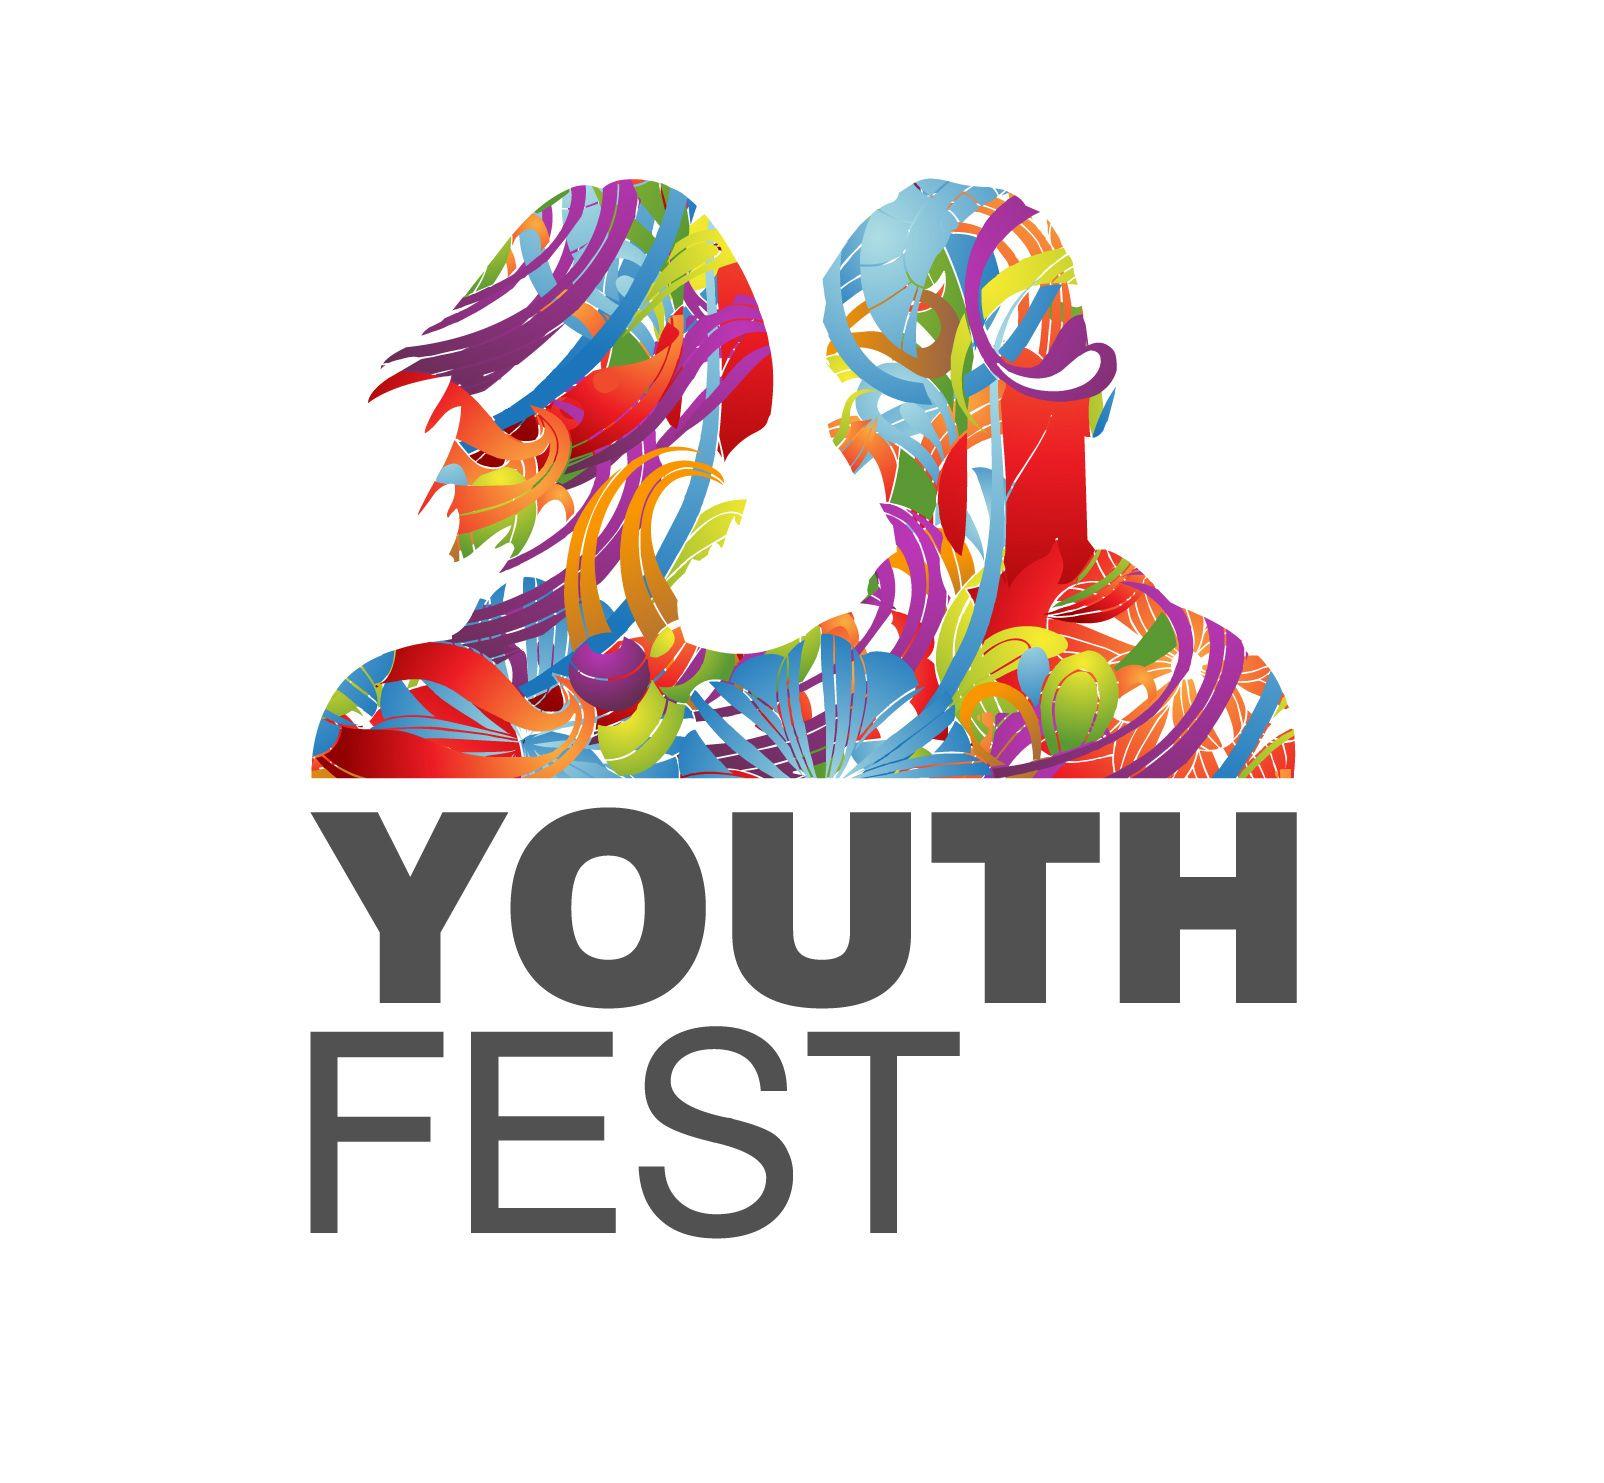 Fest Logo - About Youth Fest | Youth Fest Sri Lanka